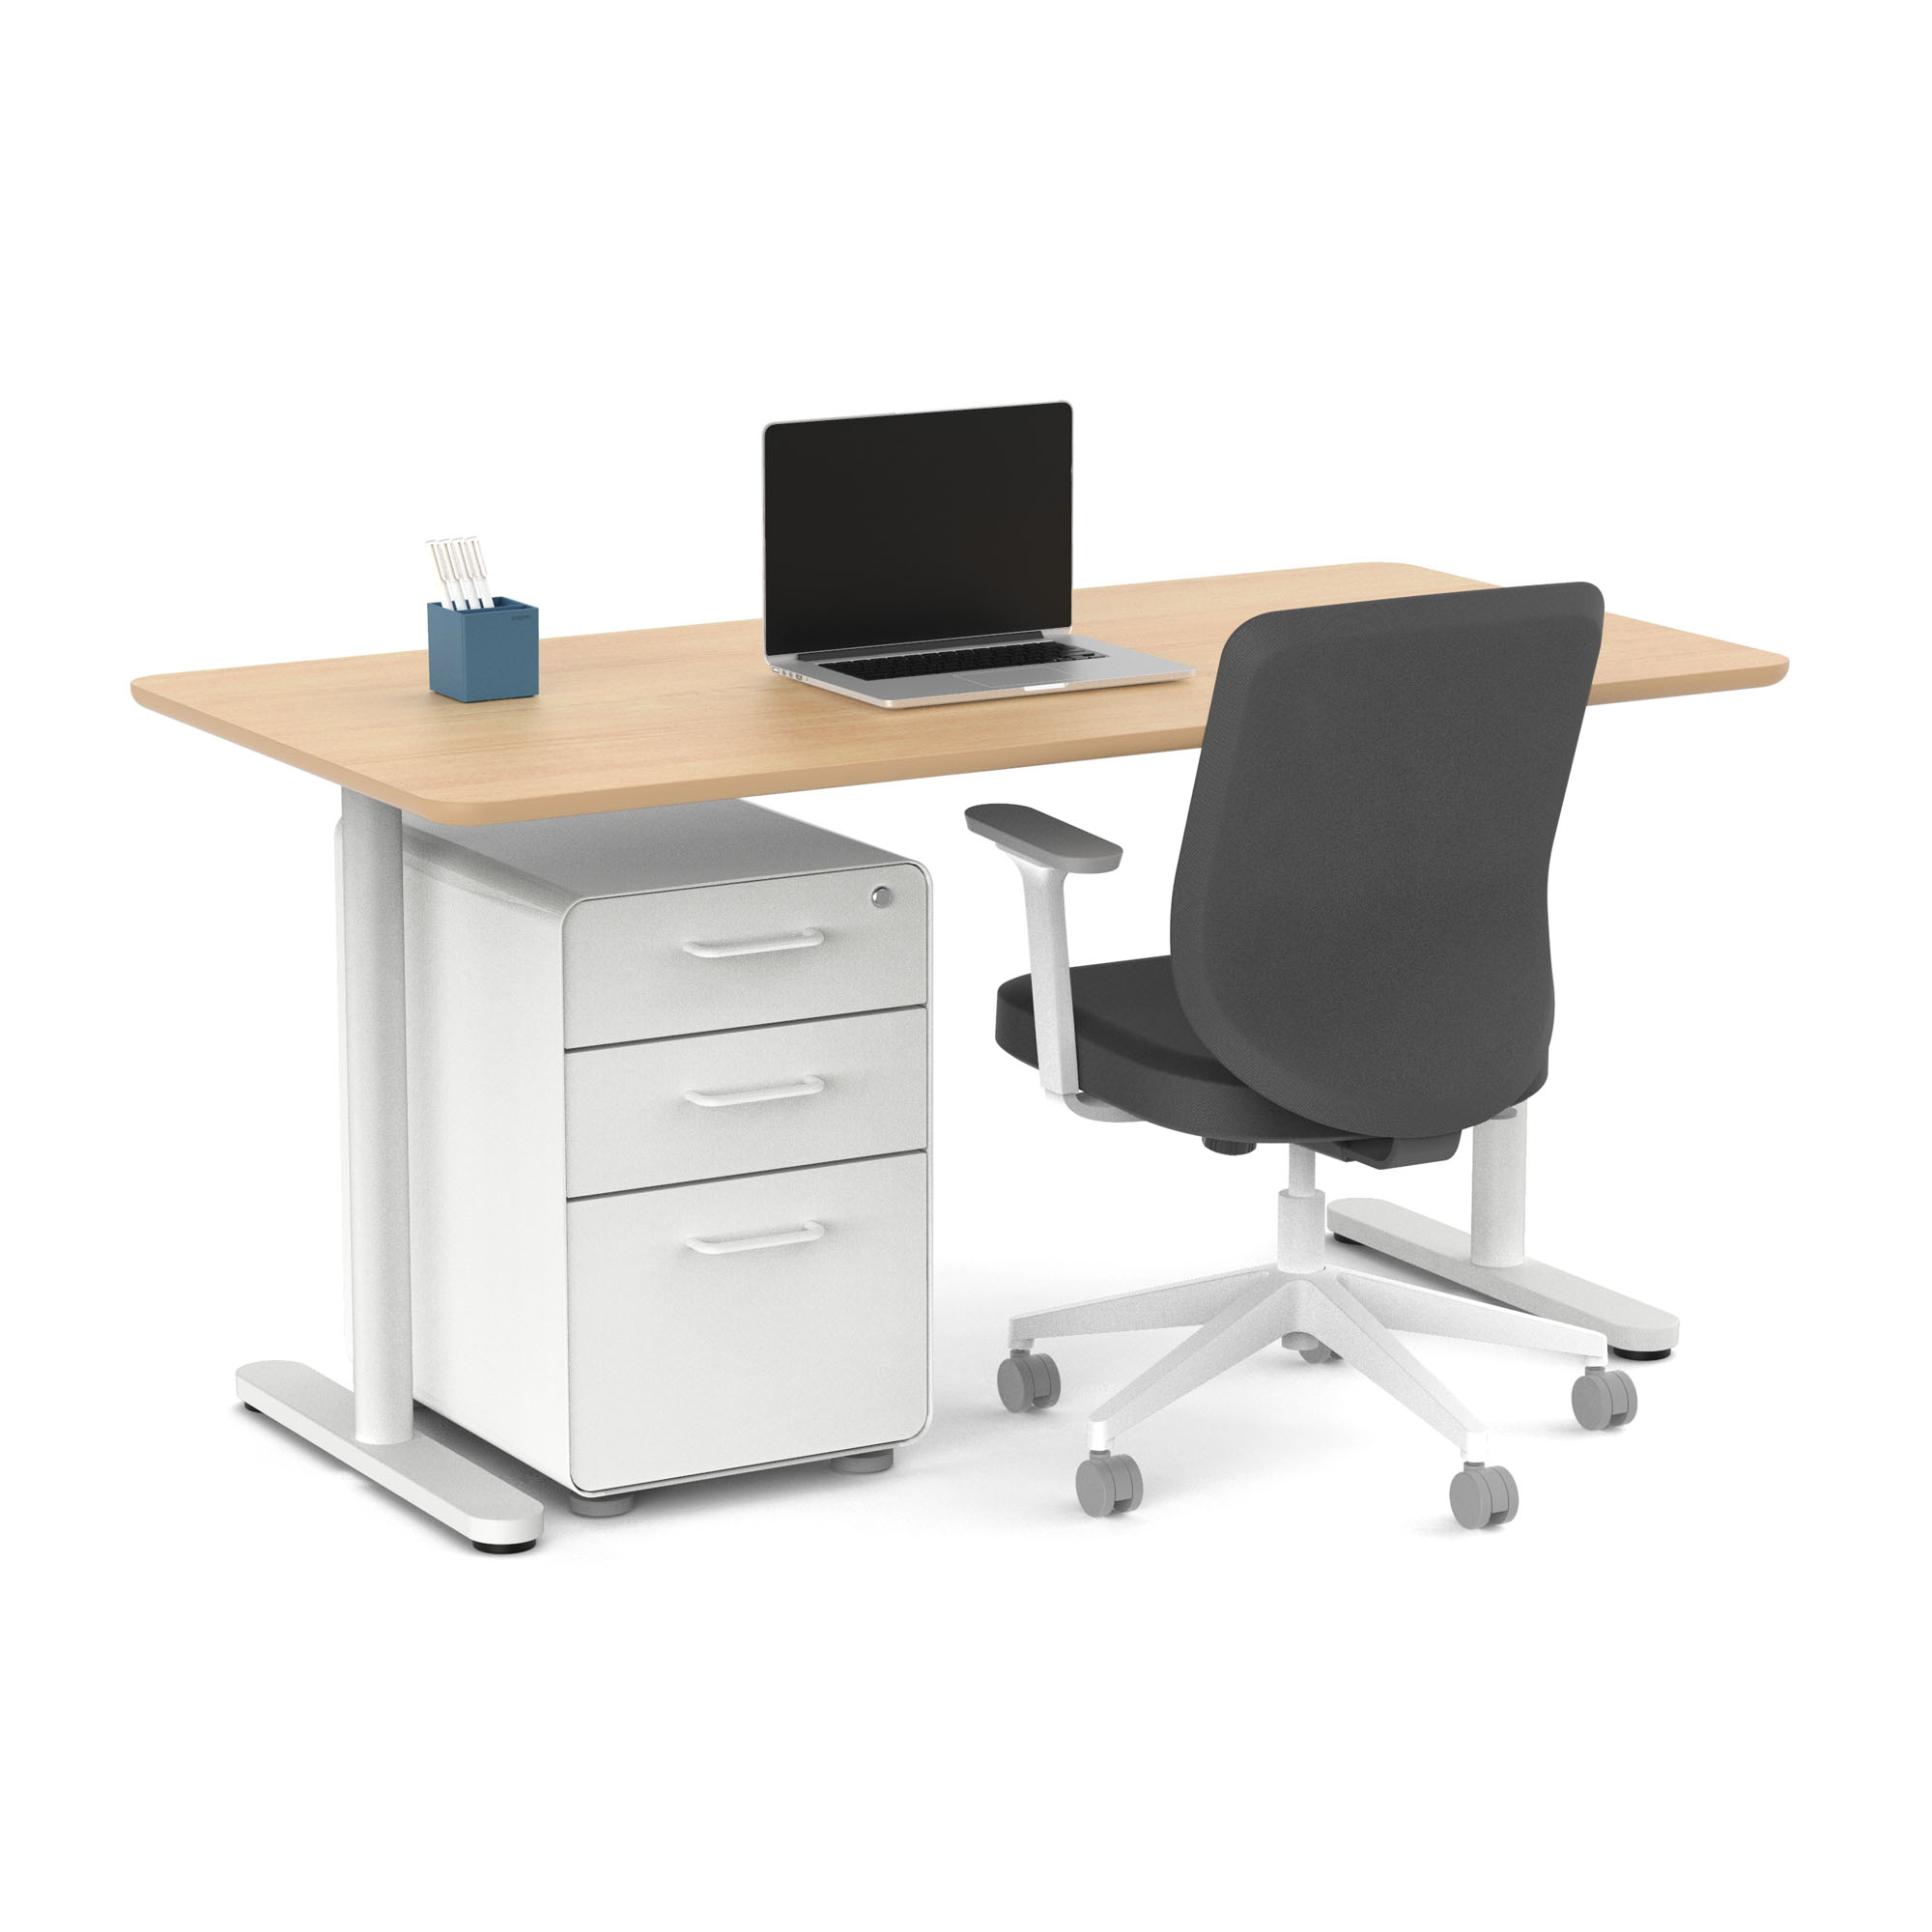 Raise Fixed Height Single Desk, White Legs